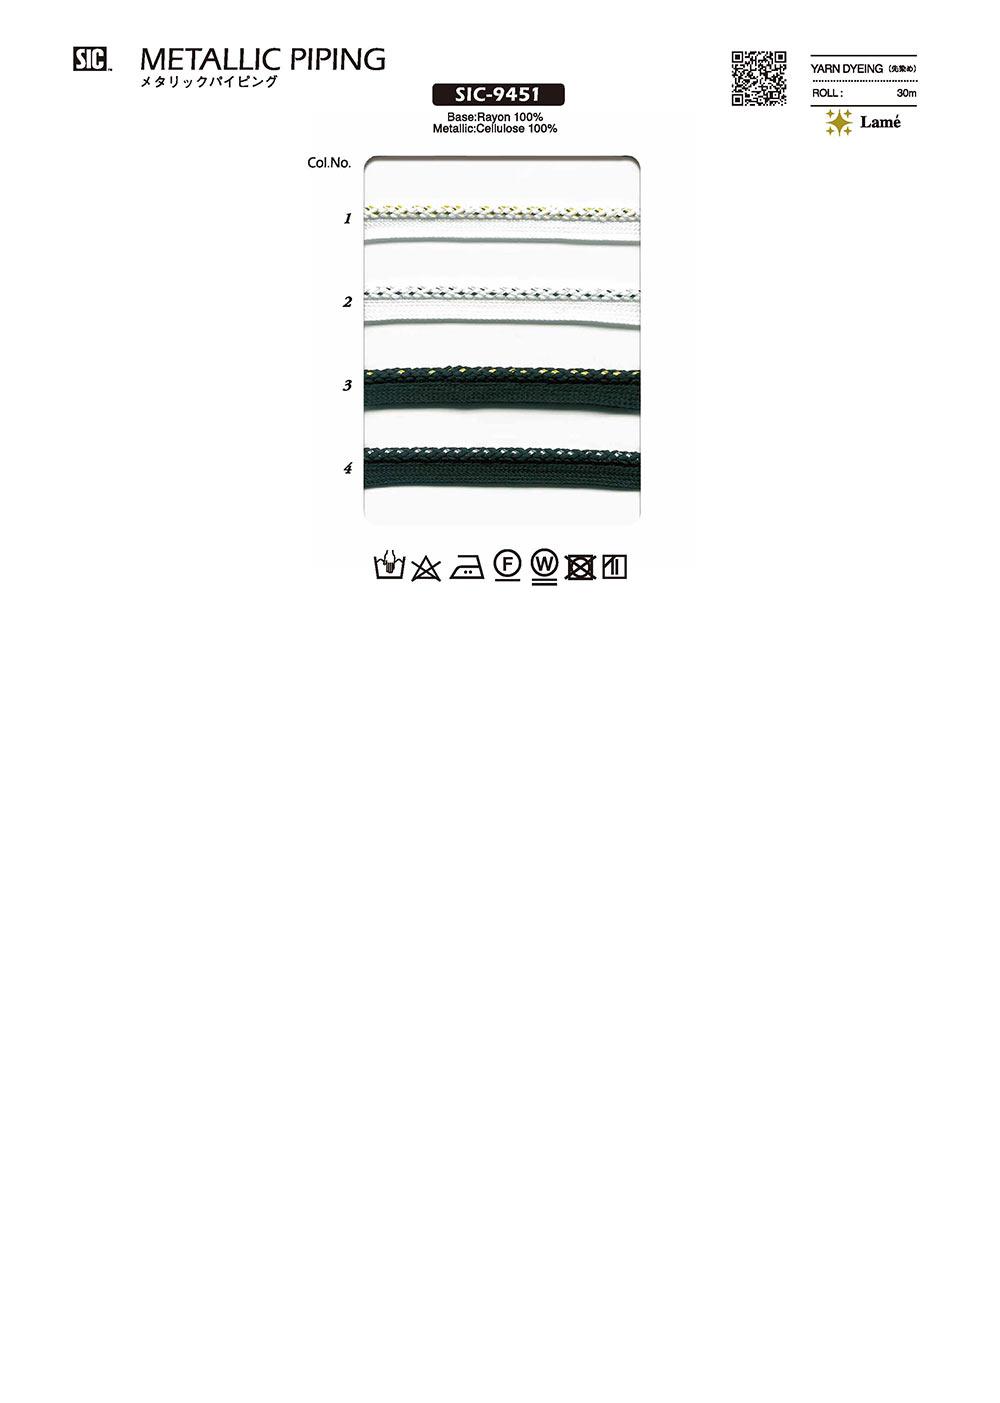 SIC-9451 Metallic Piping Tape[Ribbon Tape Cord] SHINDO(SIC)